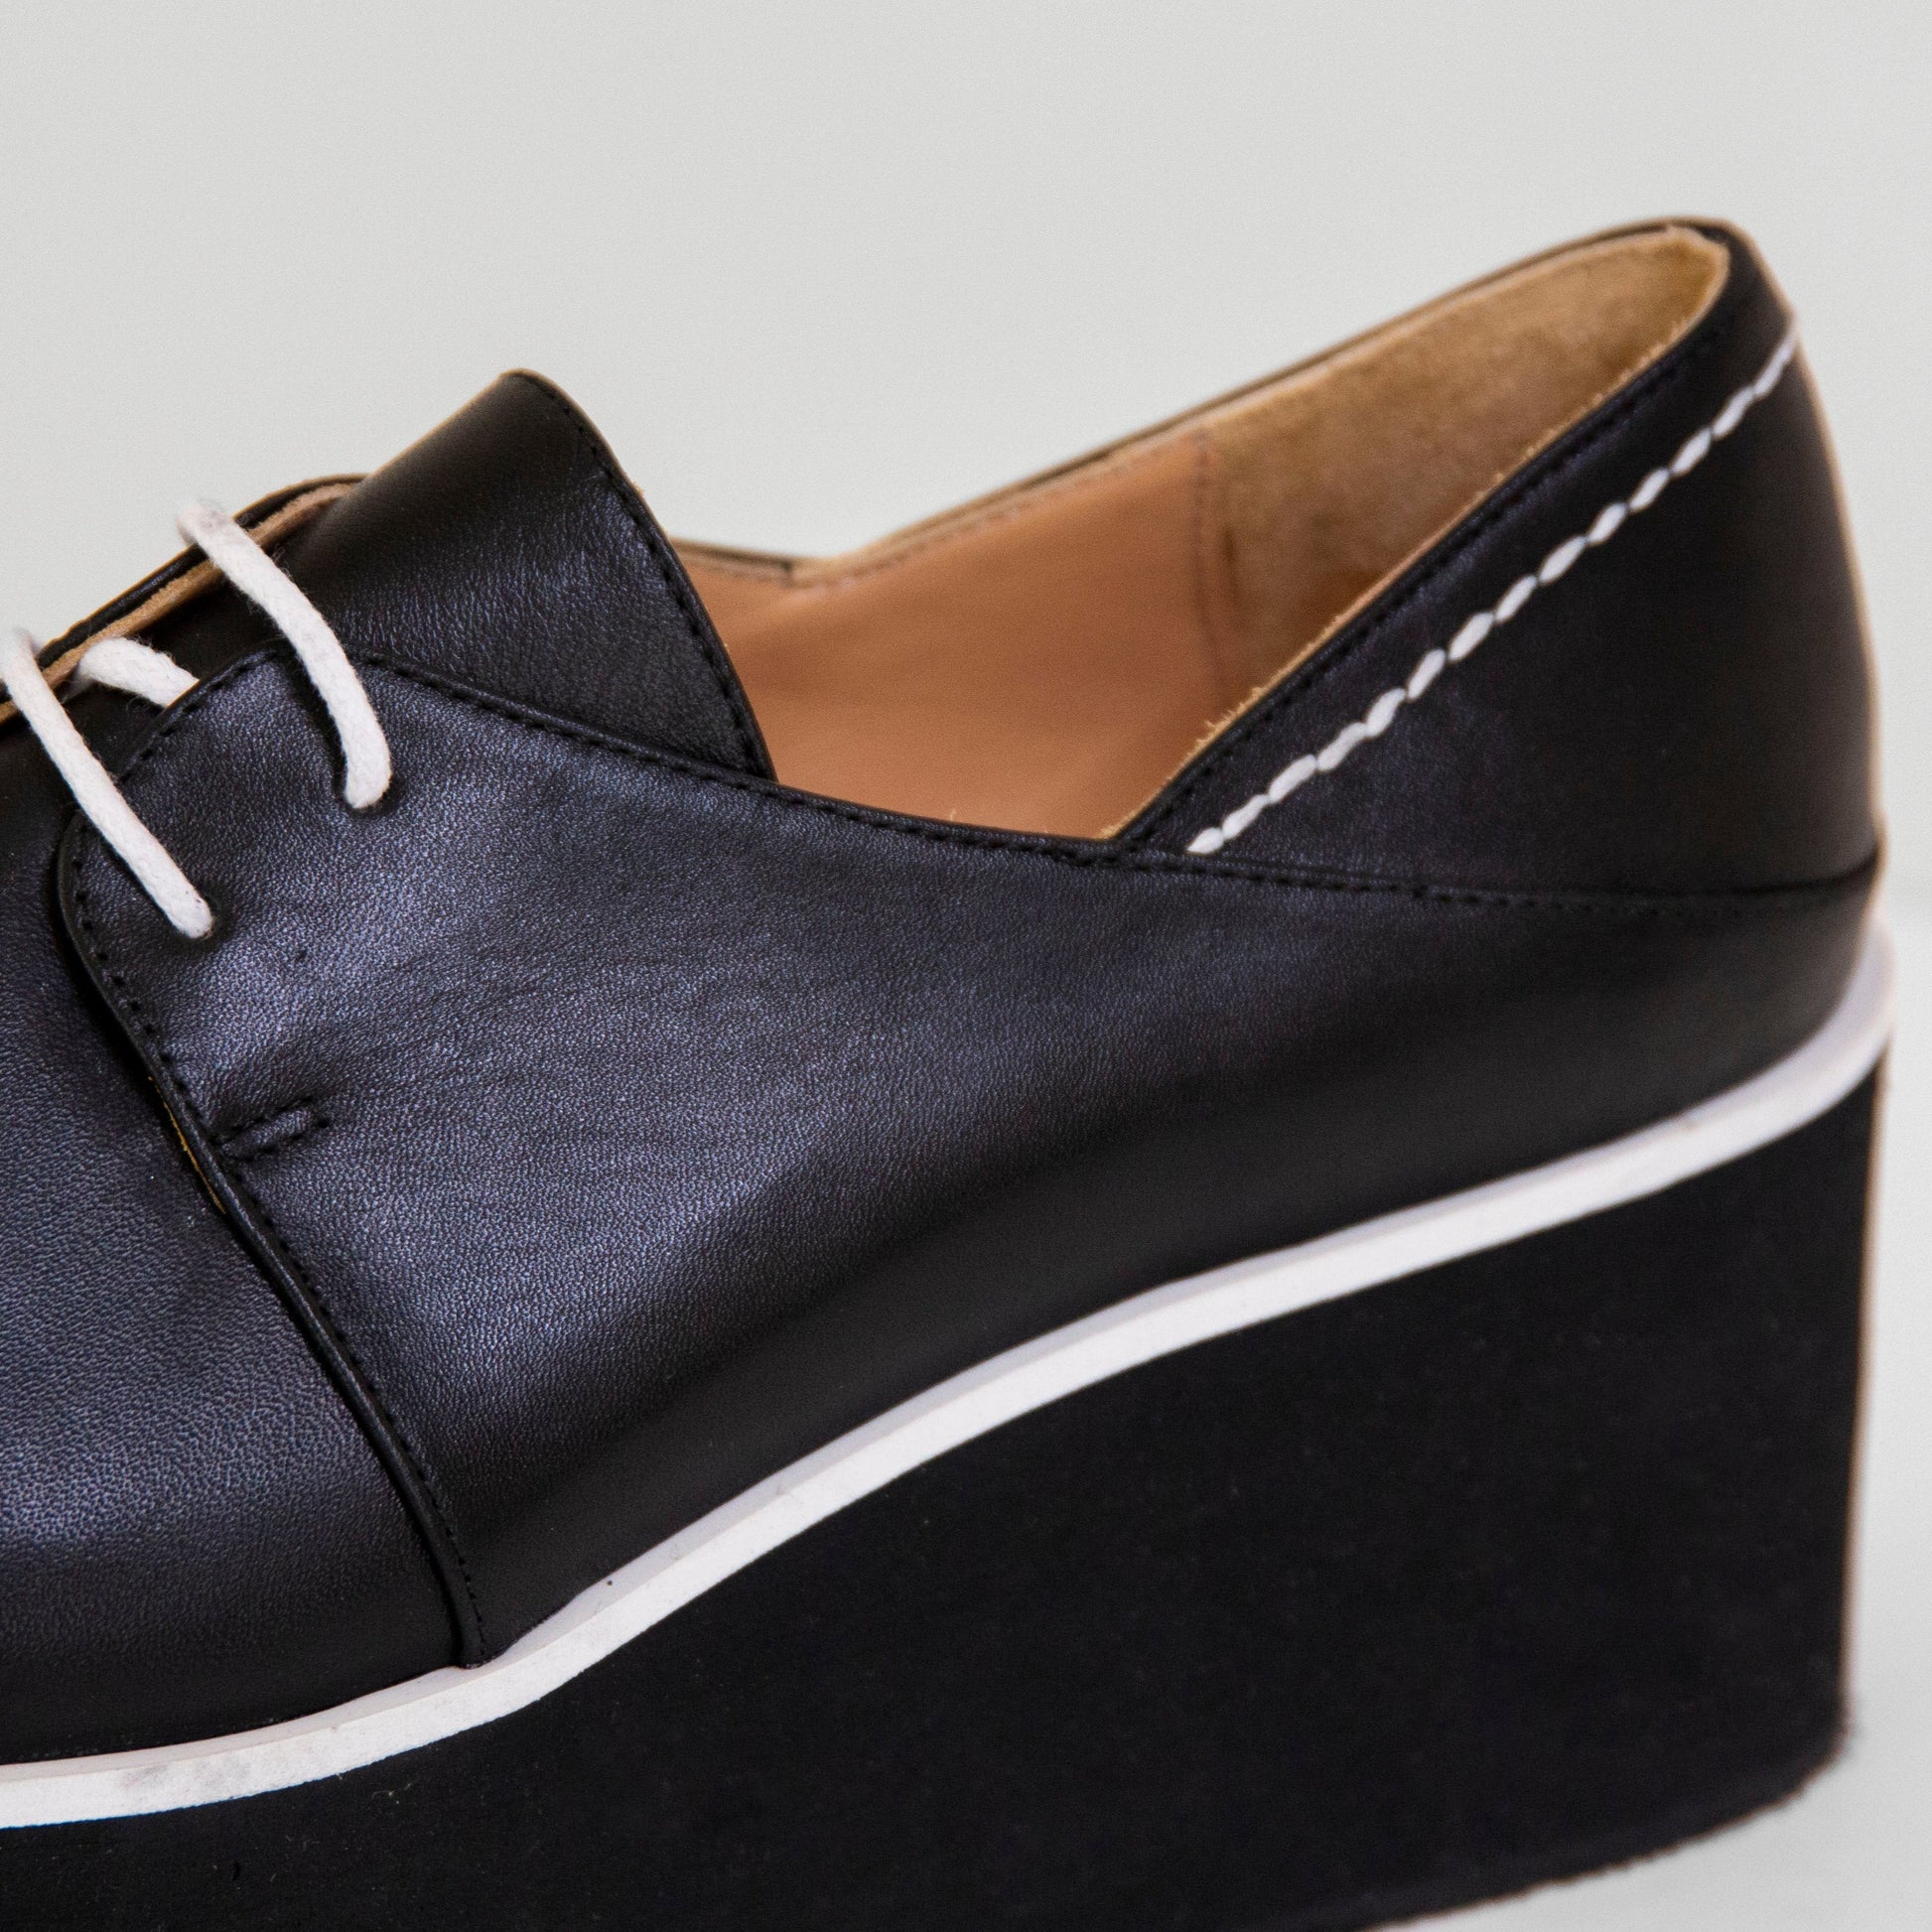 Lima black platform - Oxfords - kuwait - Ksa- shoes